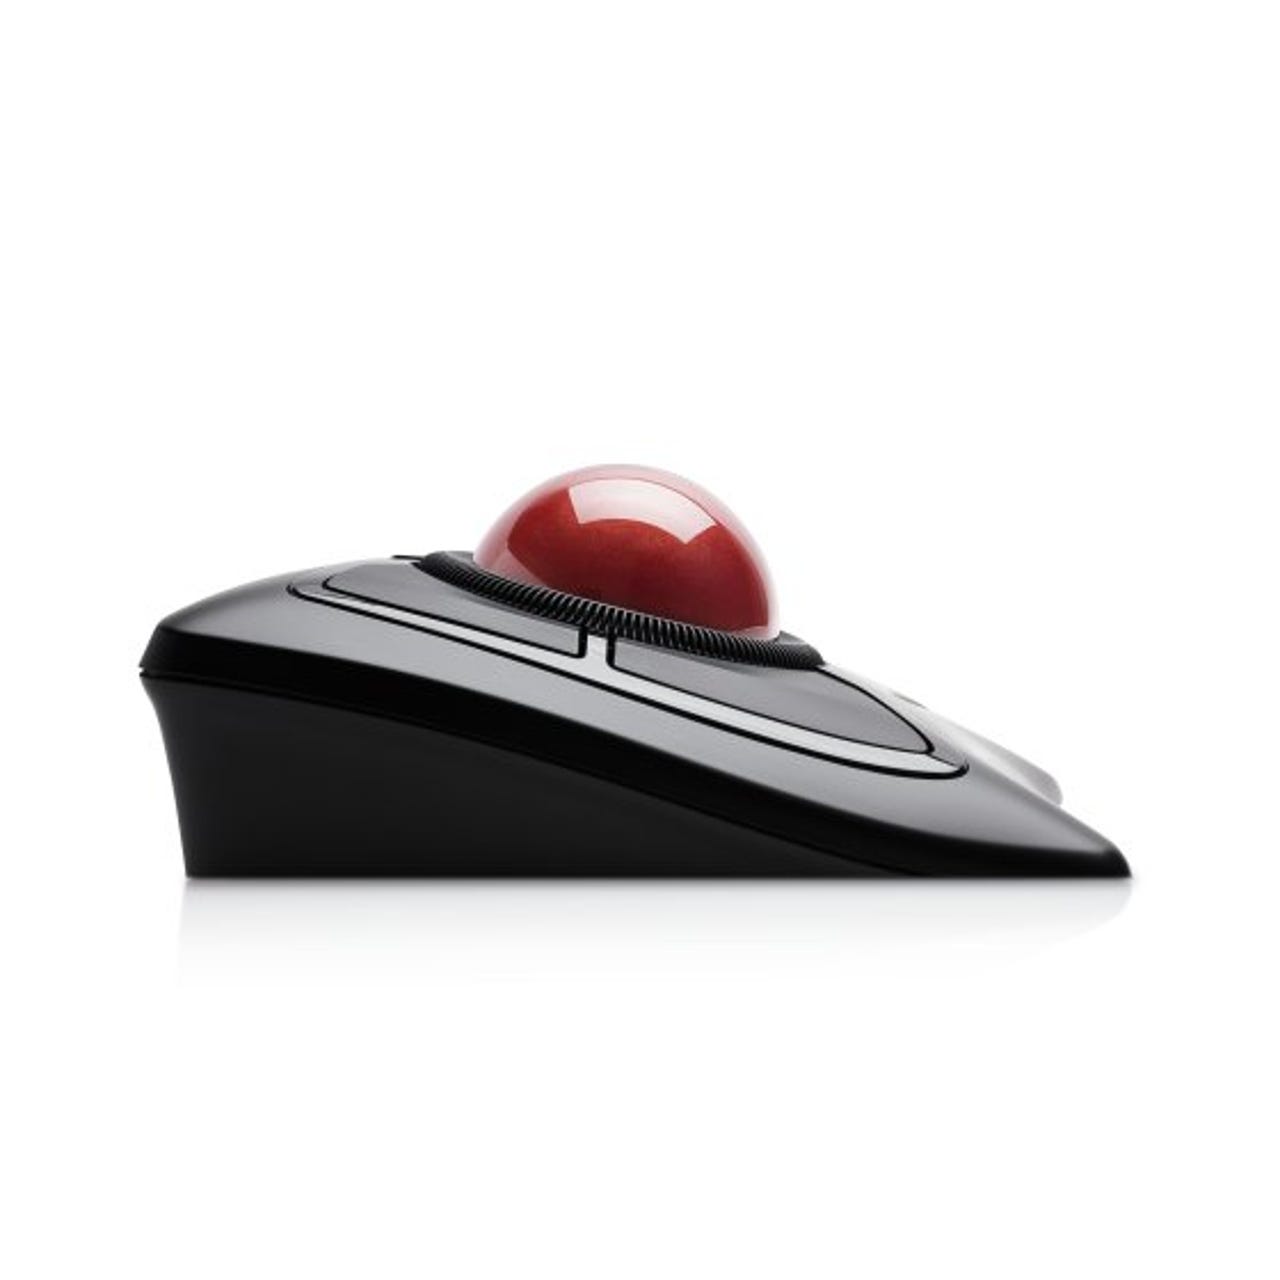 Hands-On: Kensington Expert Mouse Wireless Trackball